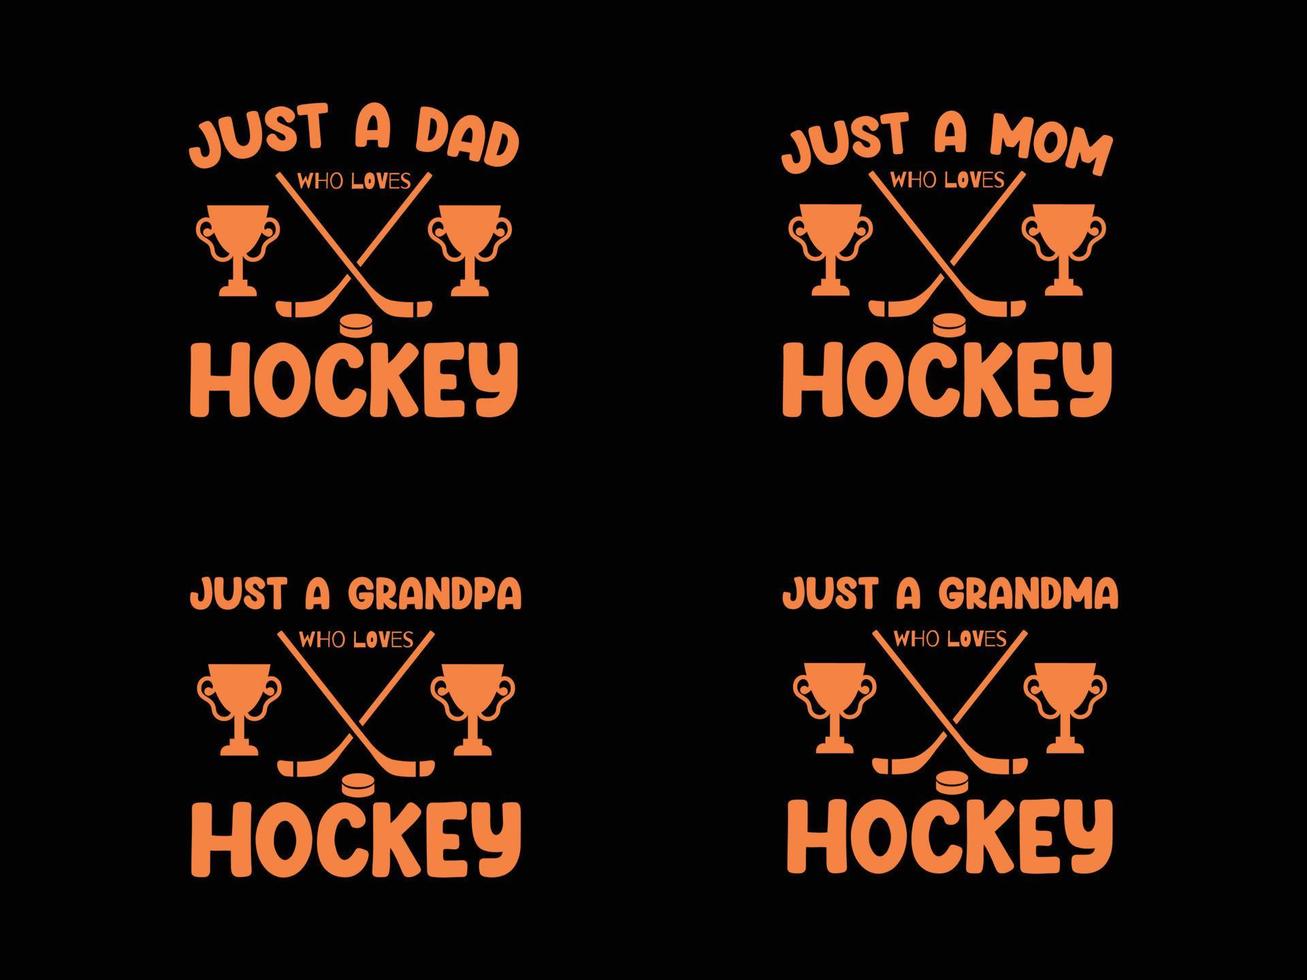 Just a dad mom grandpa grandma who loves hockey T shirt design vector